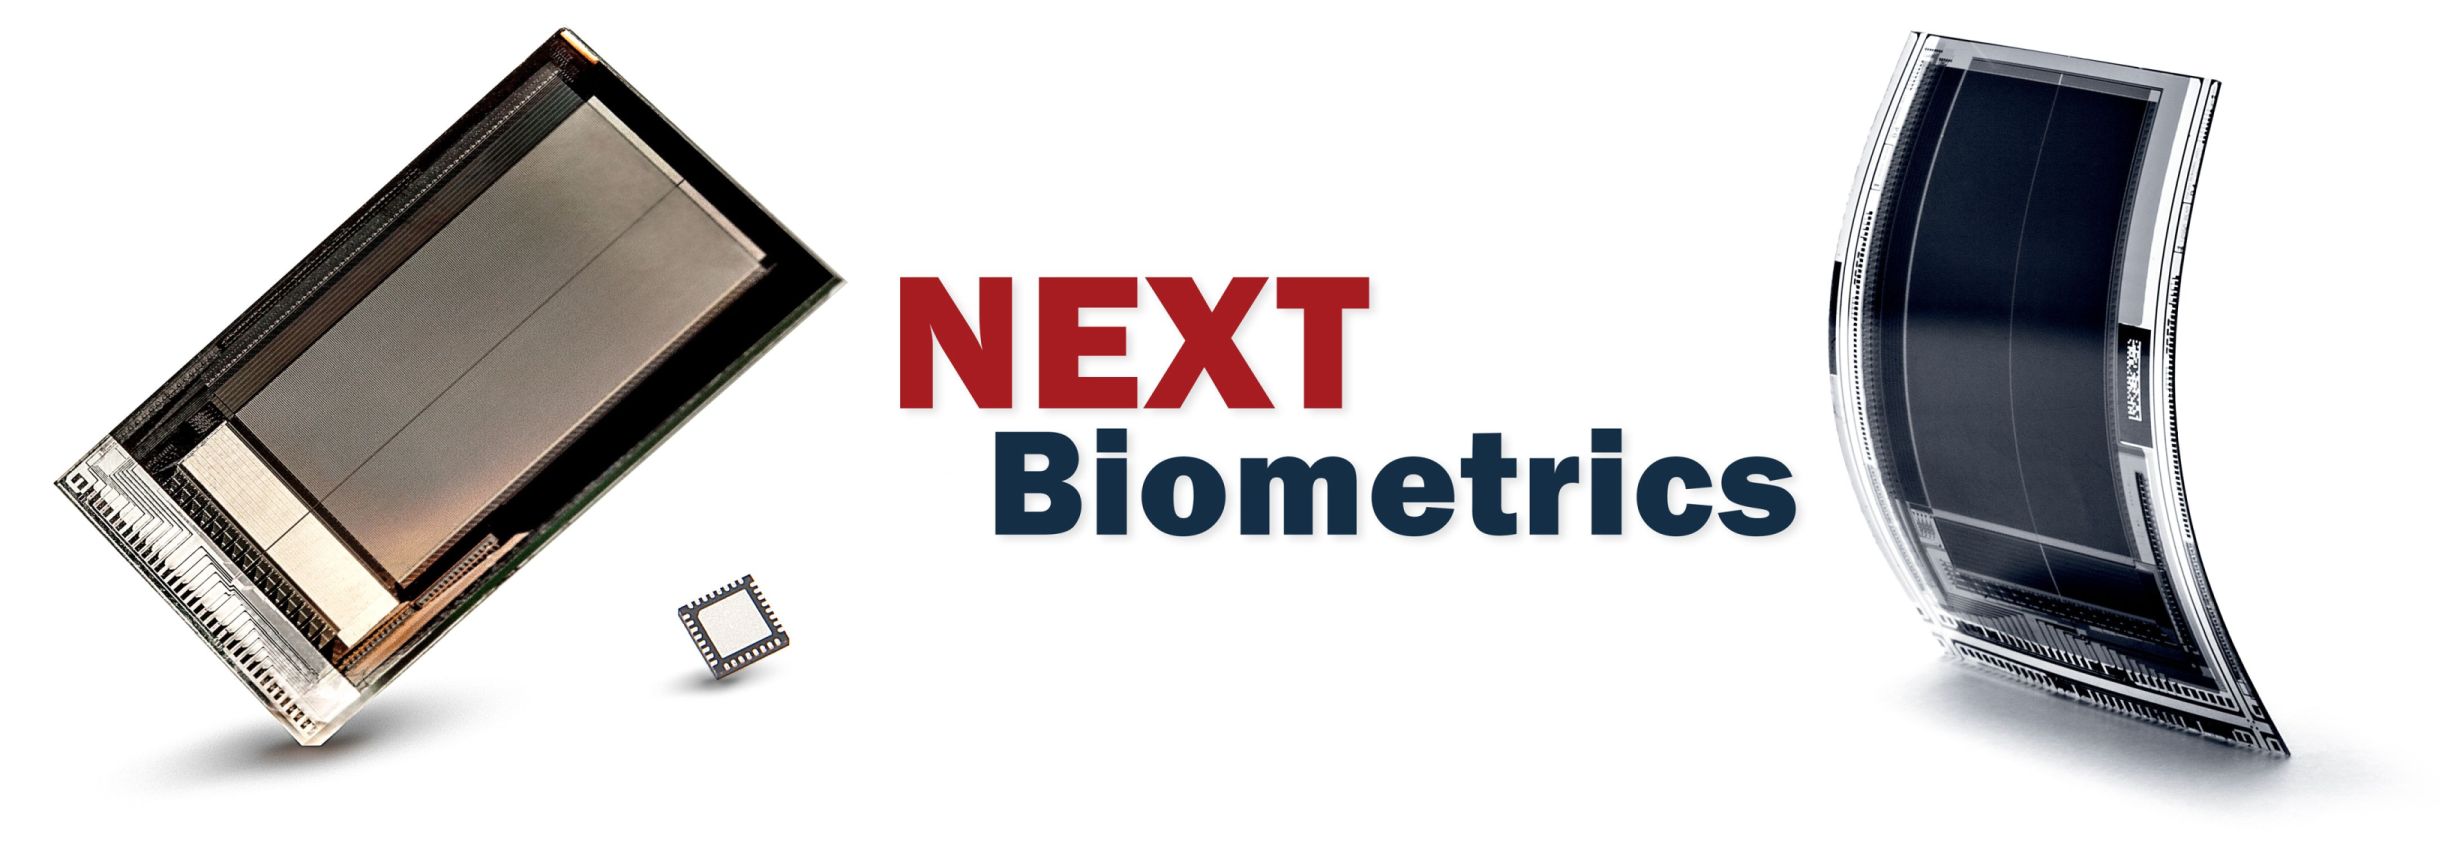 NEXT Biometrics Says